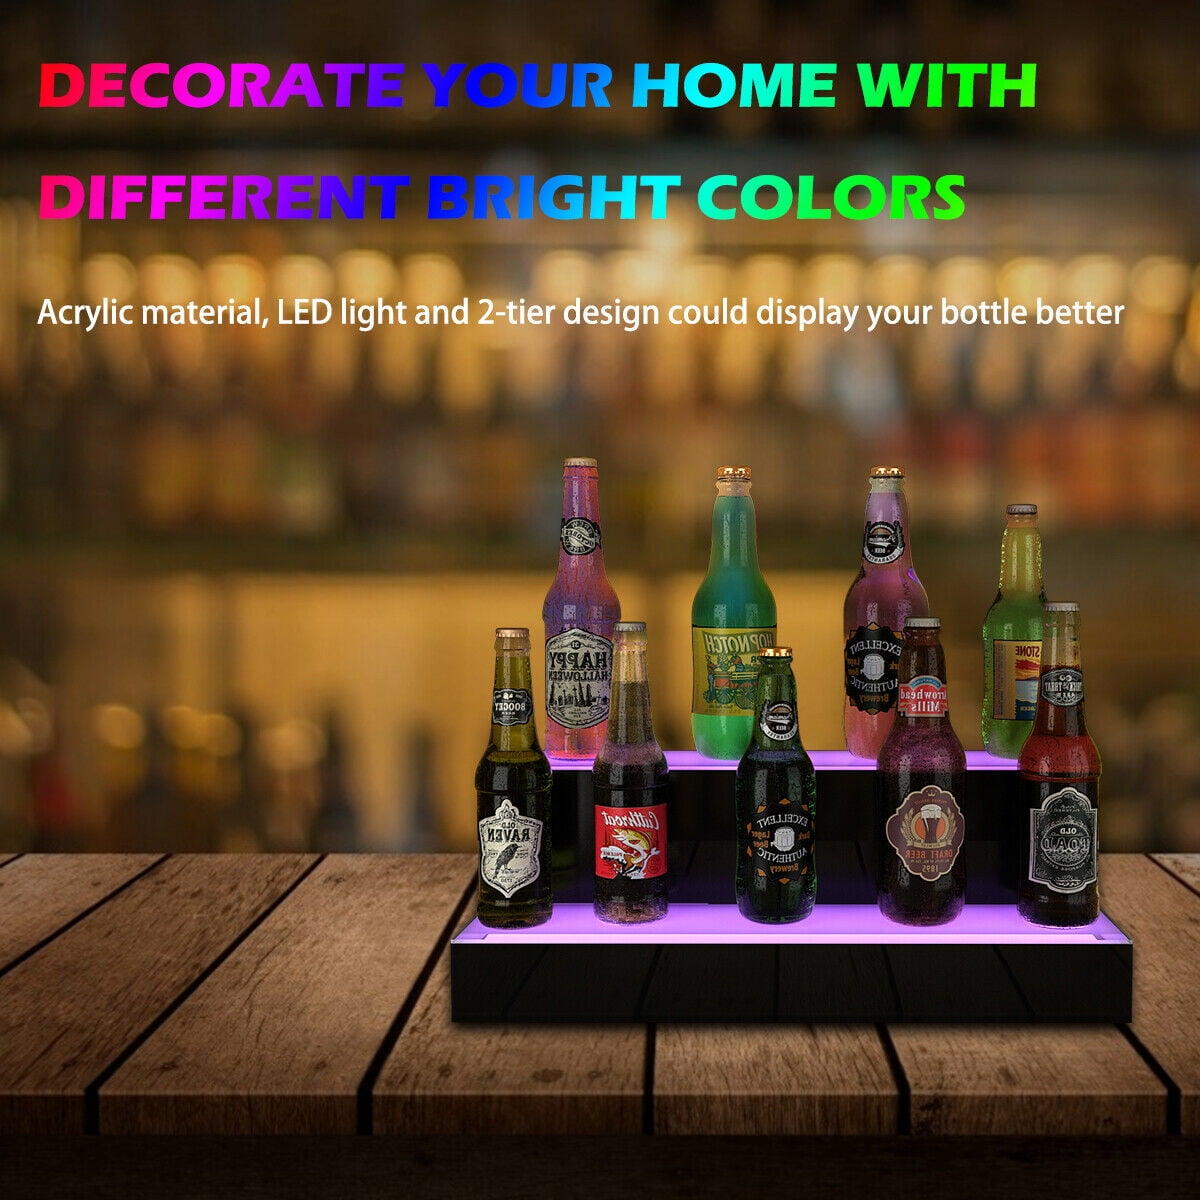 SUNCOO LED Lighted Liquor Bottle Display 20 2 Step Illuminated Bottle Shelf 2 Tier Home Bar Bottle Shelf Drinks Lighting Shelves High Gloss Black Finish with Remote Control 